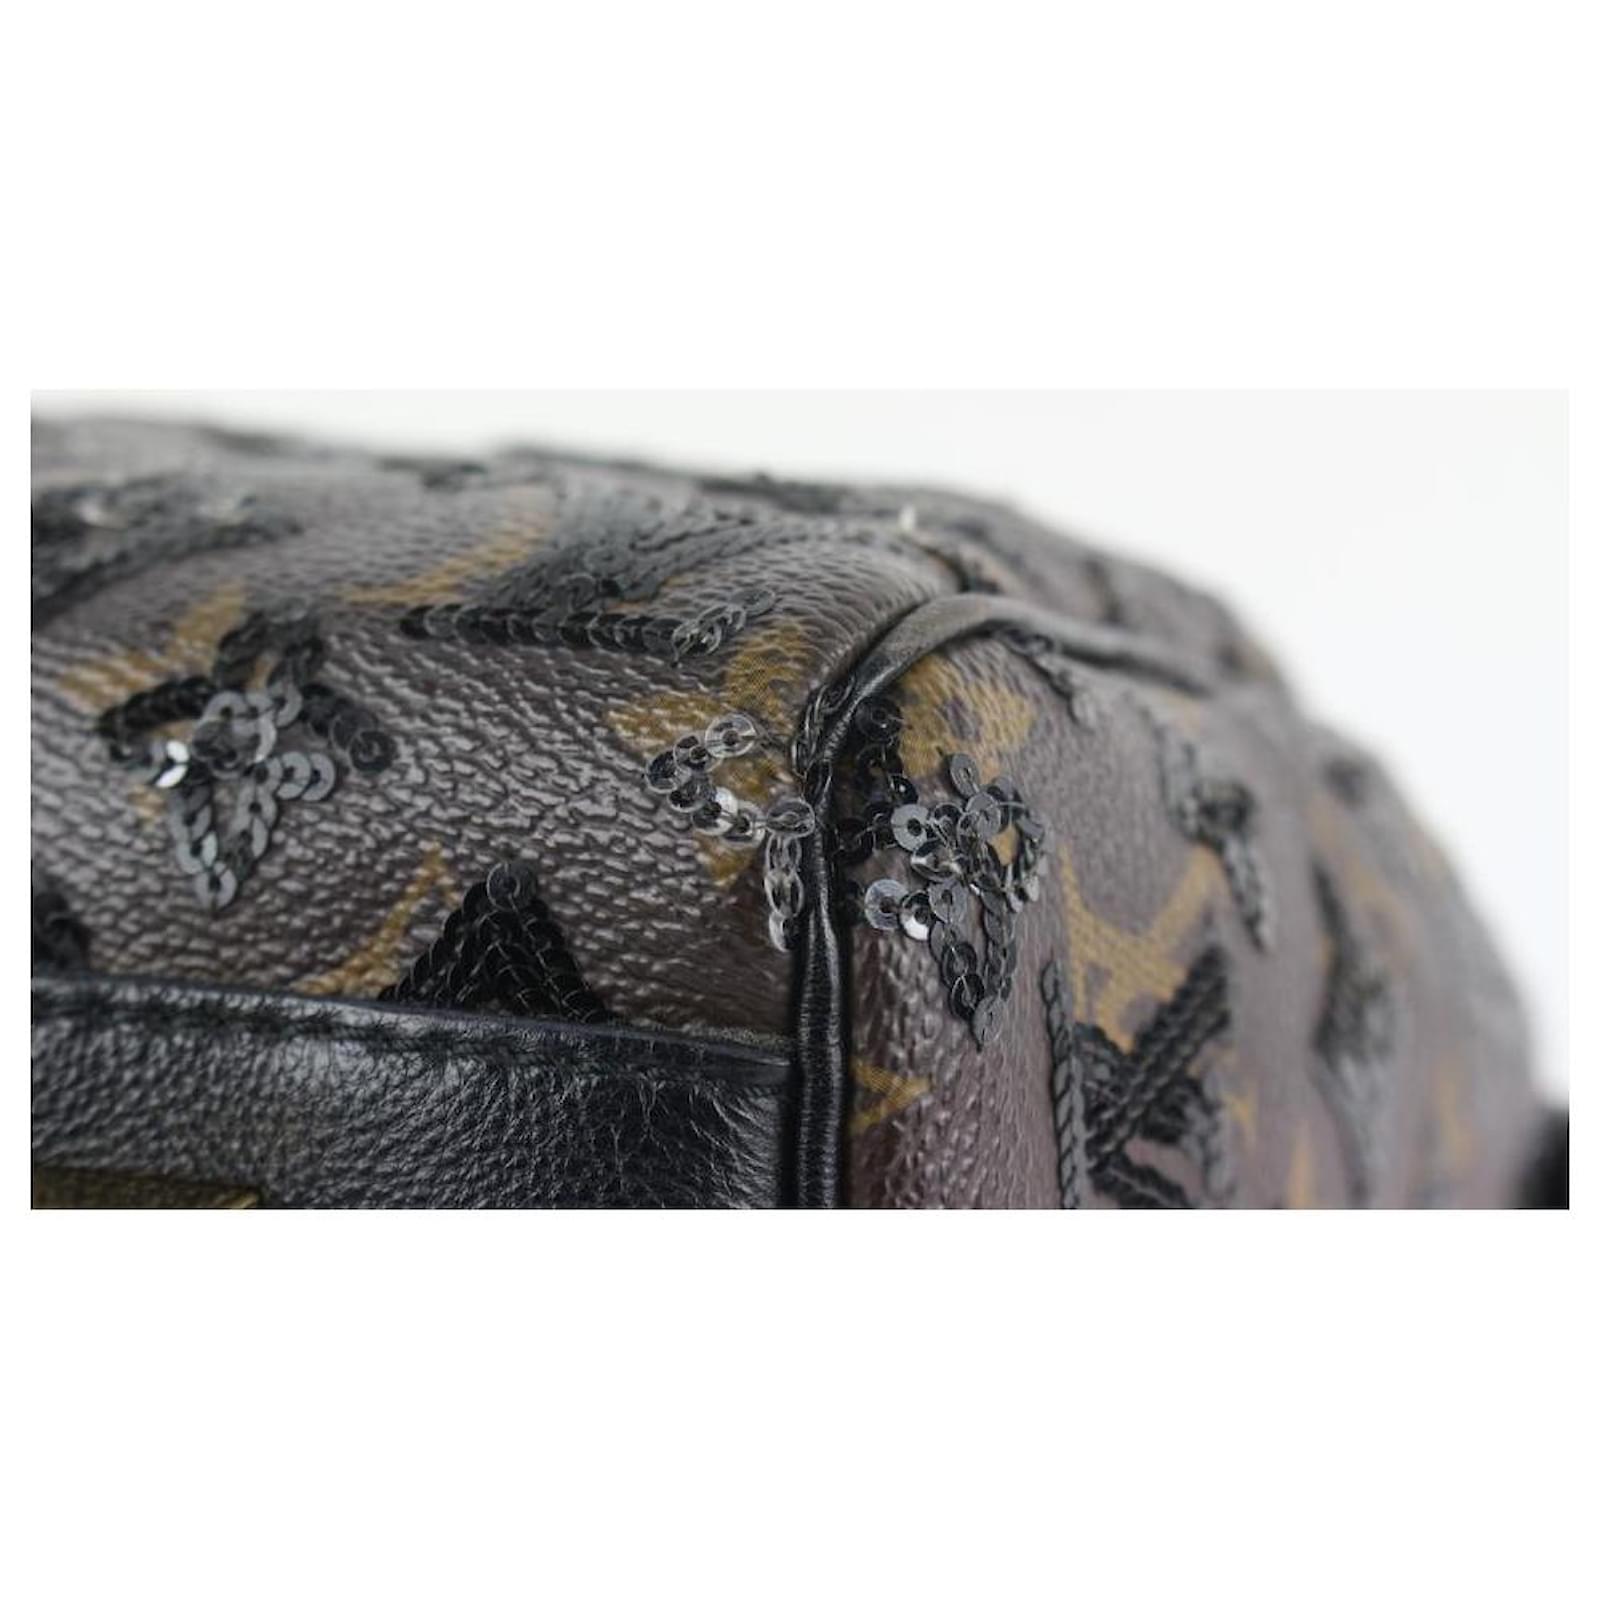 Louis Vuitton Monogram Canvas & Black Sequin Speedy 28 Bag .